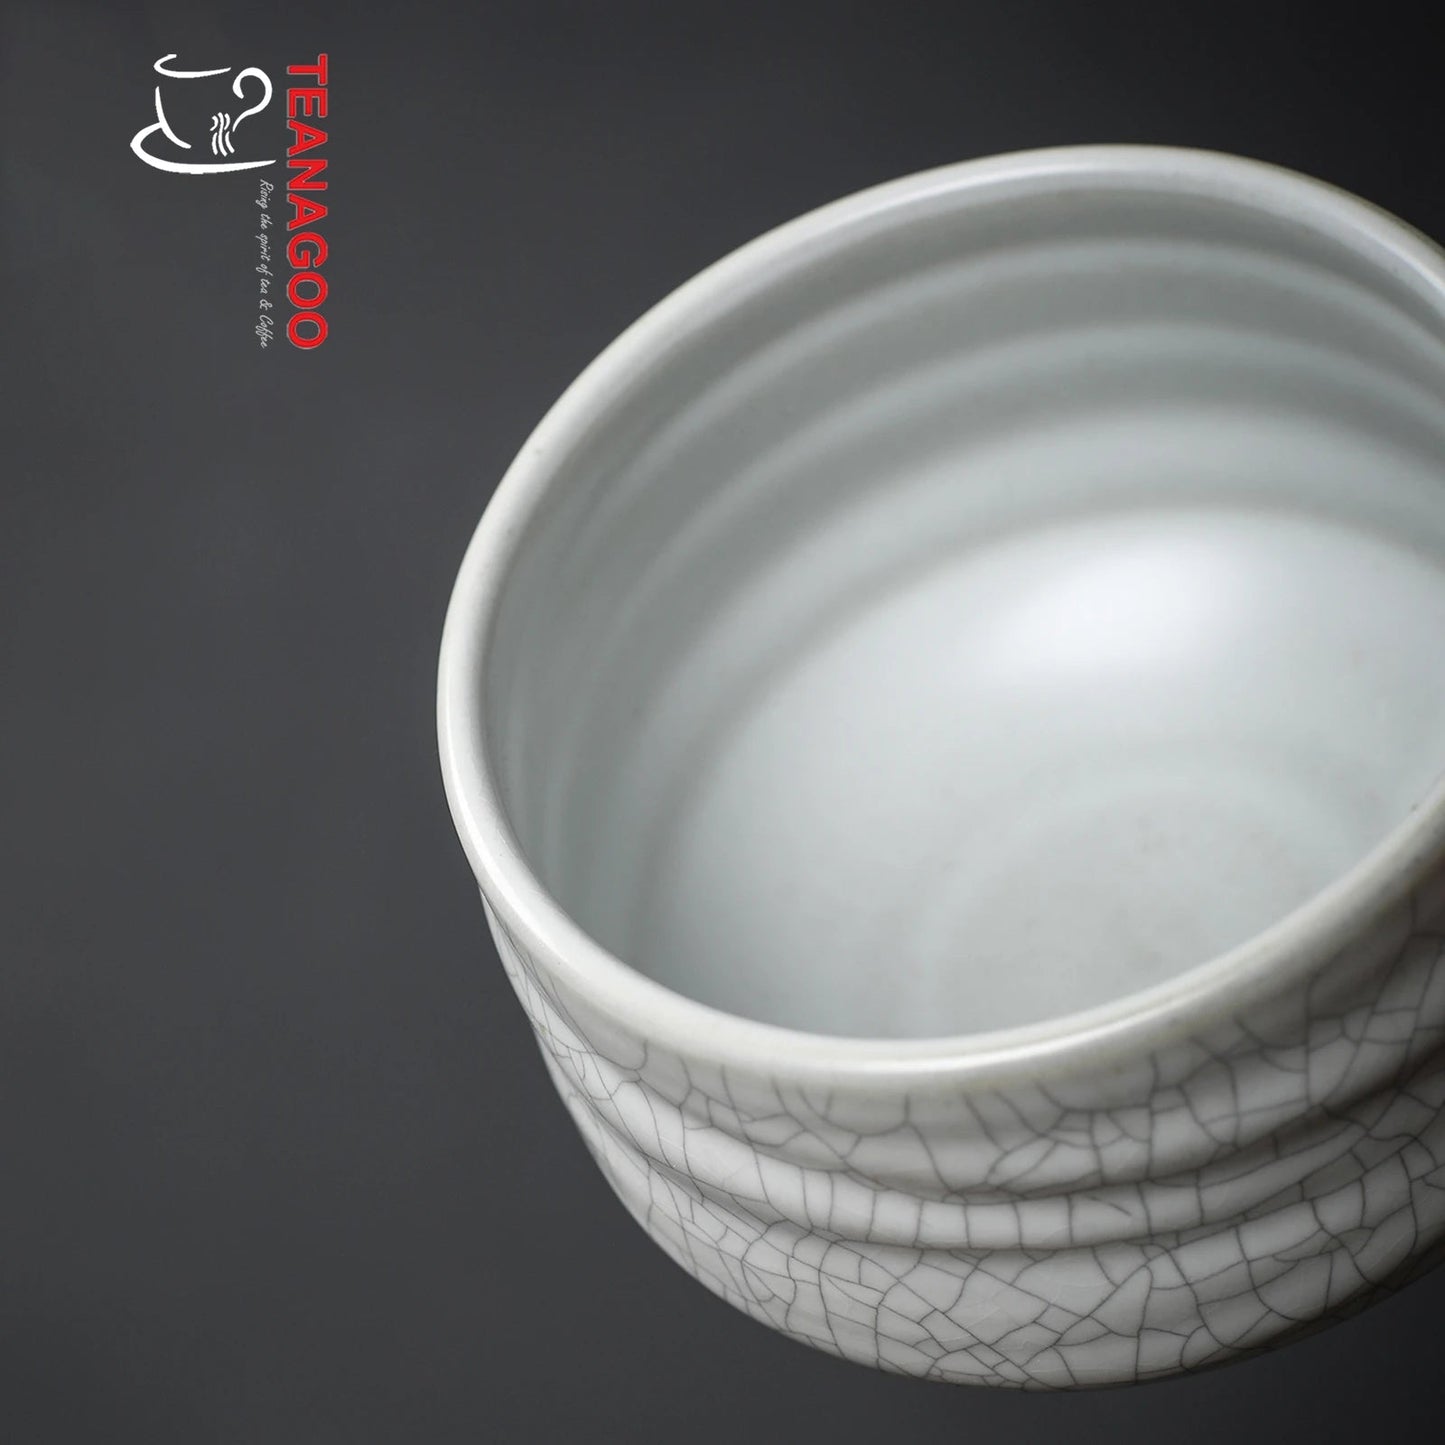 Japanese Ceramic Matcha Bowl with Whisk holder, TG-K5